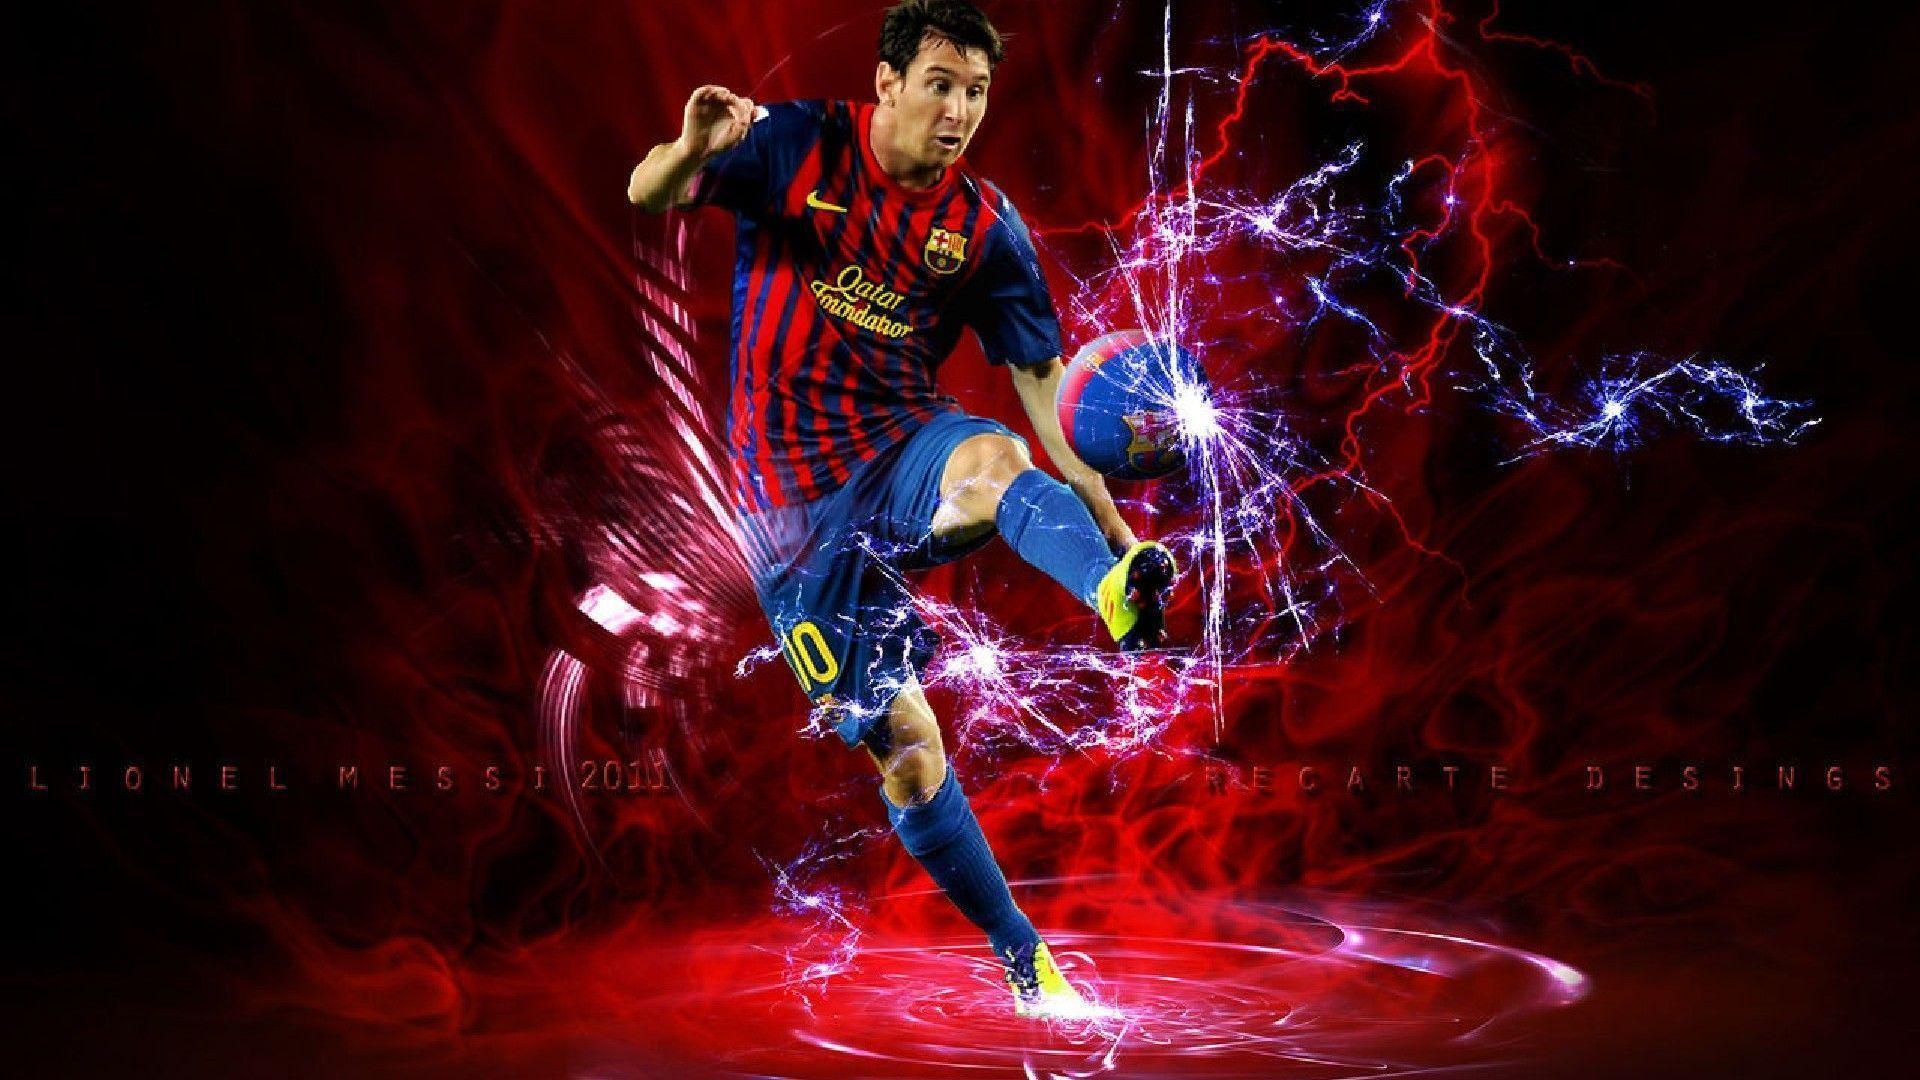 Lionel Messi 1080p HD Wallpaper